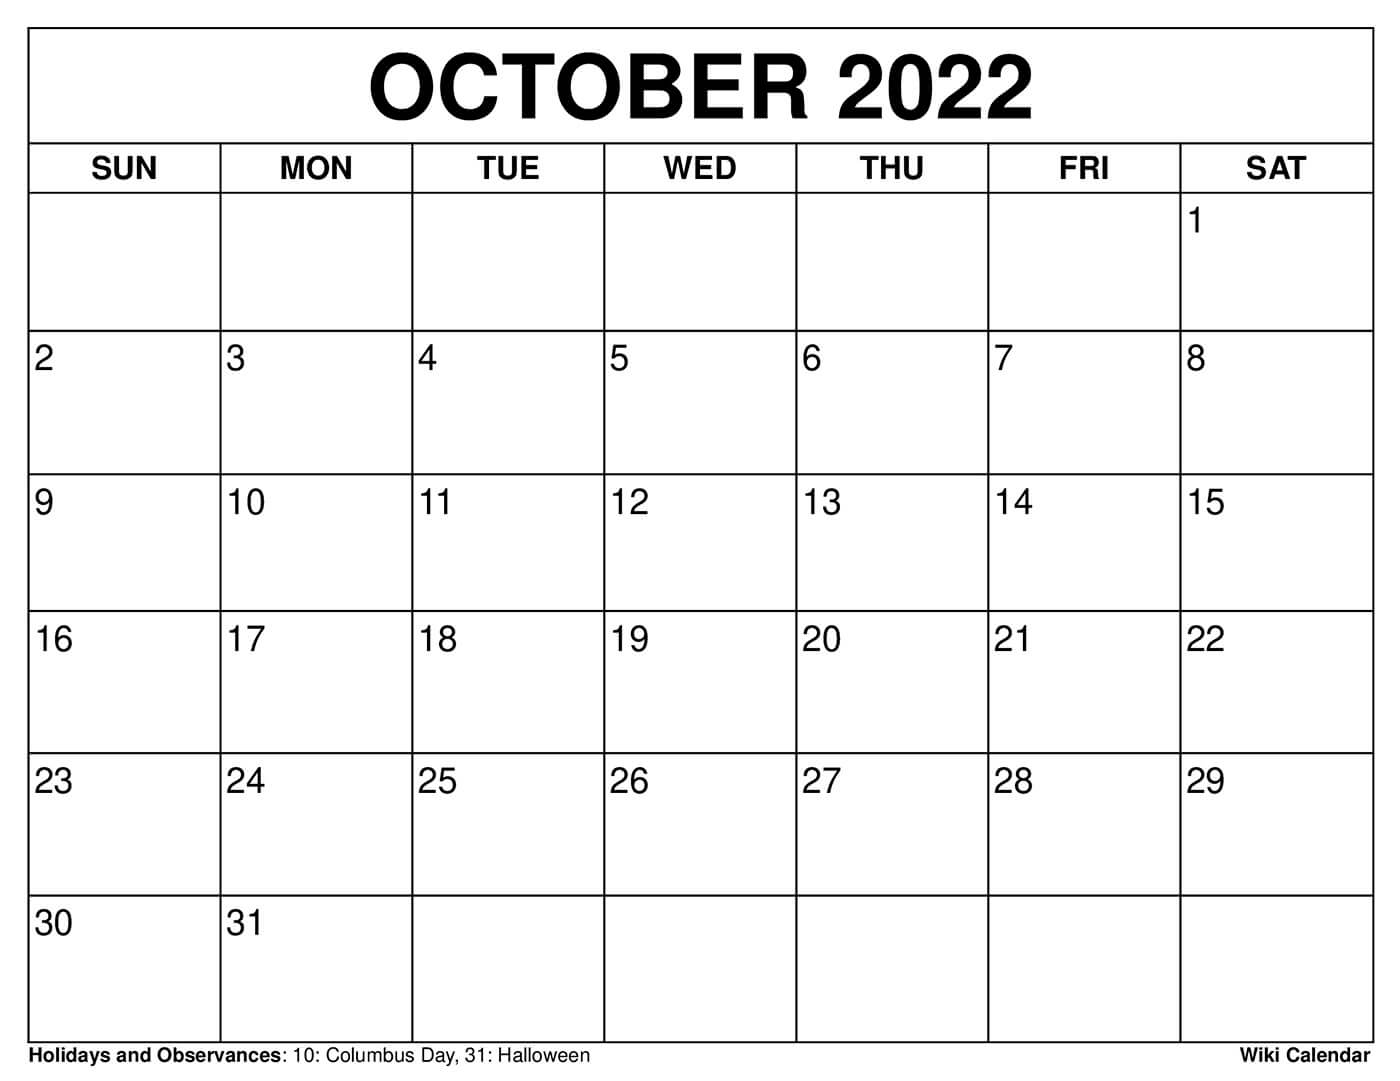 Oct 2022 Calendar With Holidays Free Printable October 2022 Calendars - Wiki Calendar